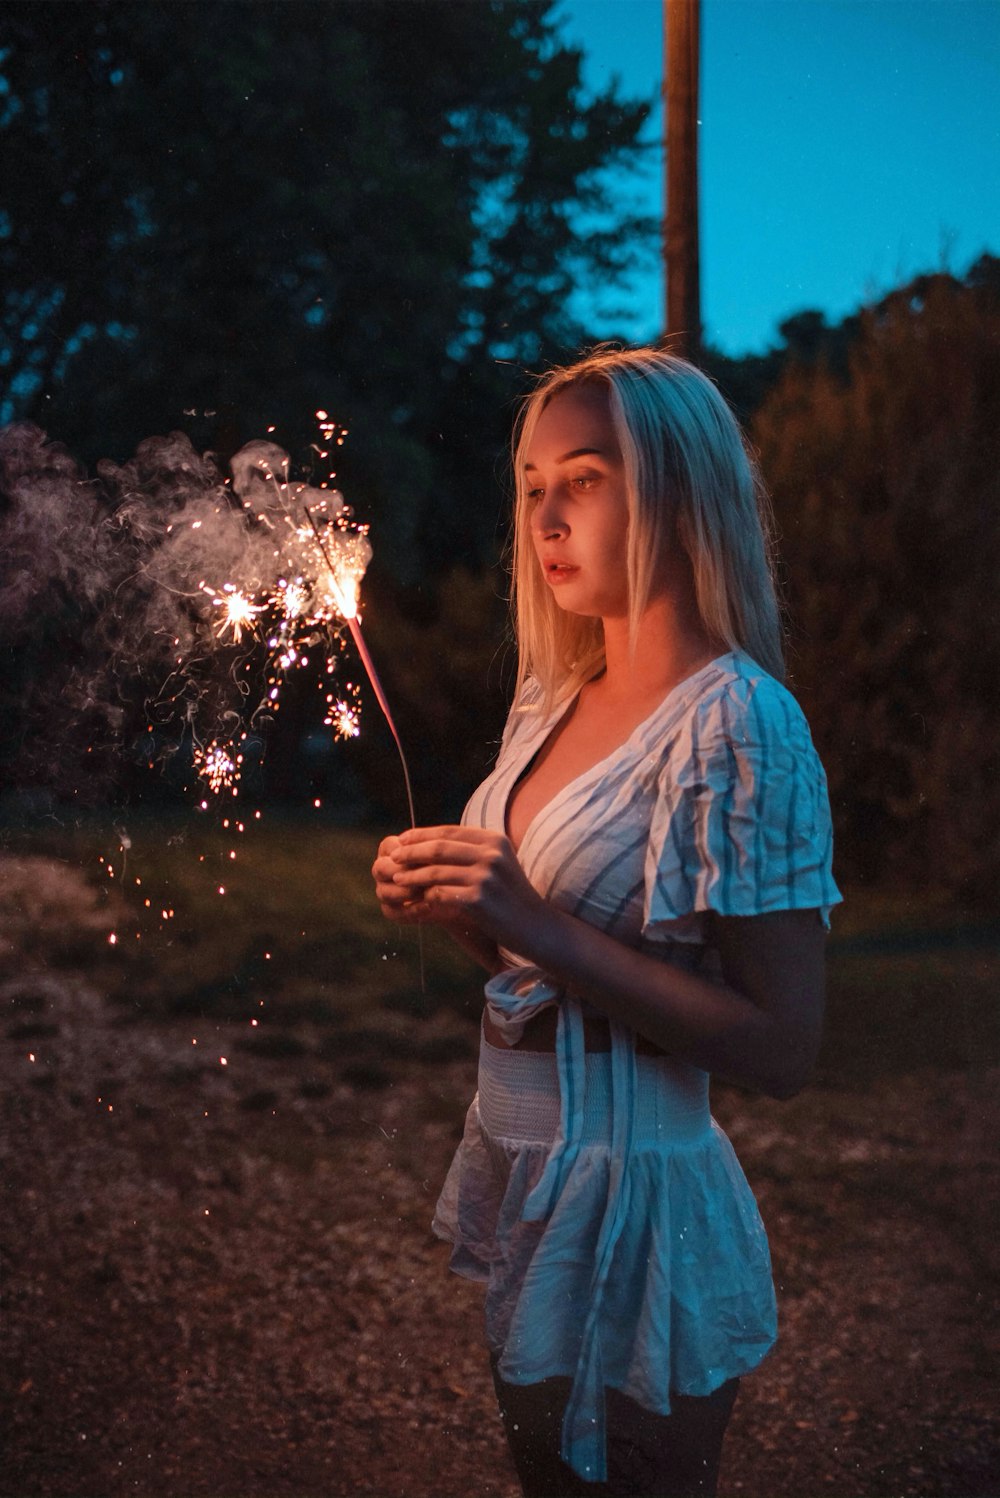 woman holding sparkler